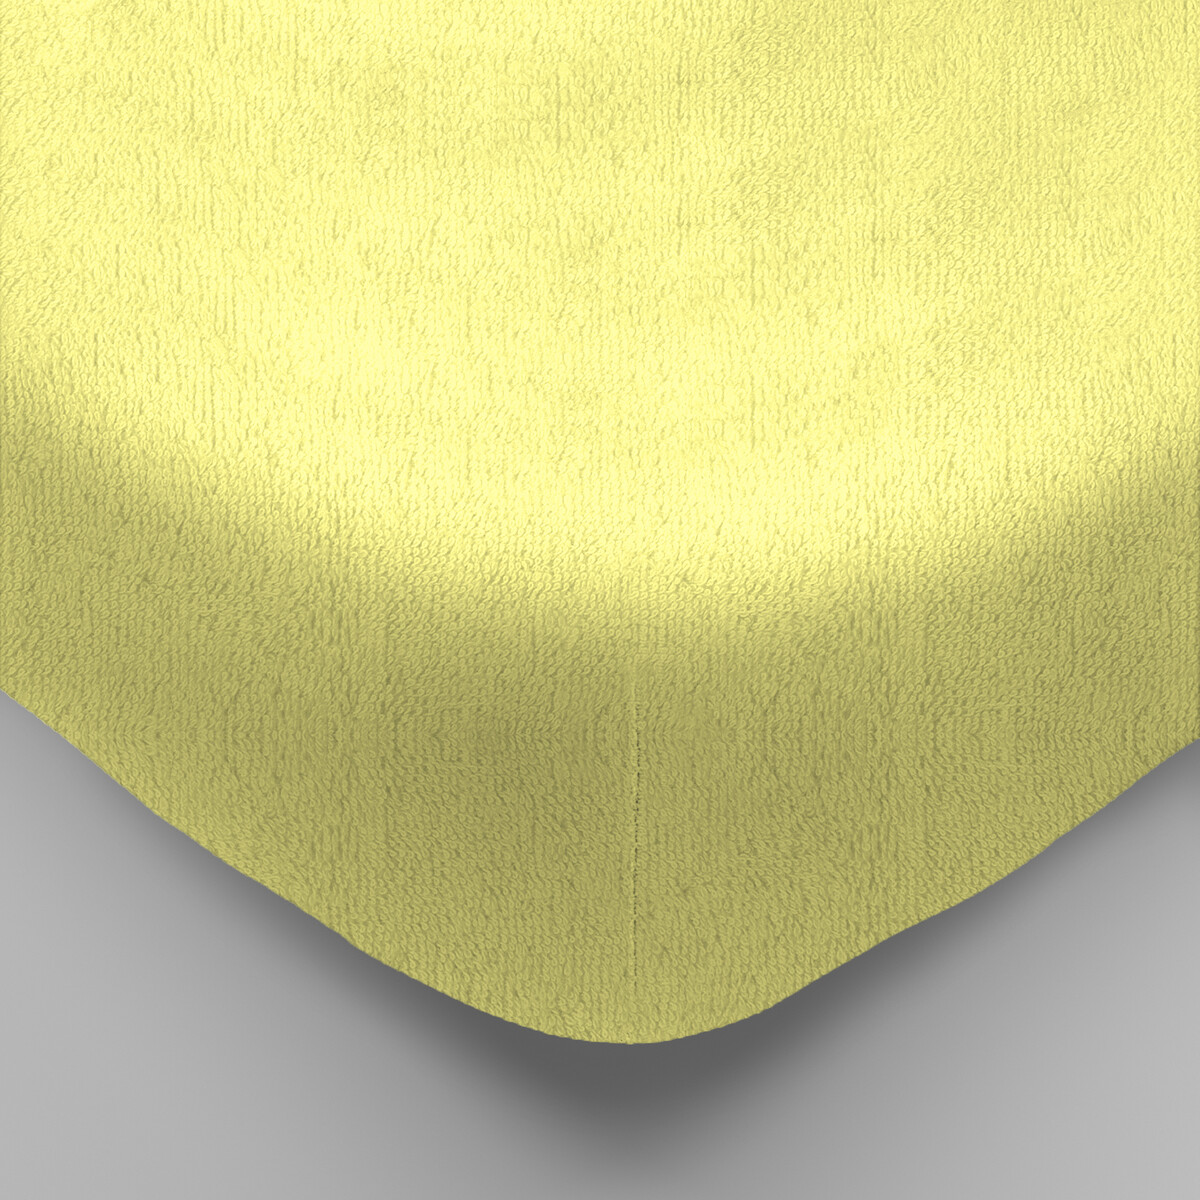 Простыня на резинке LUXSONIA, цвет желтый, размер 180х200 см 03825367 - фото 1